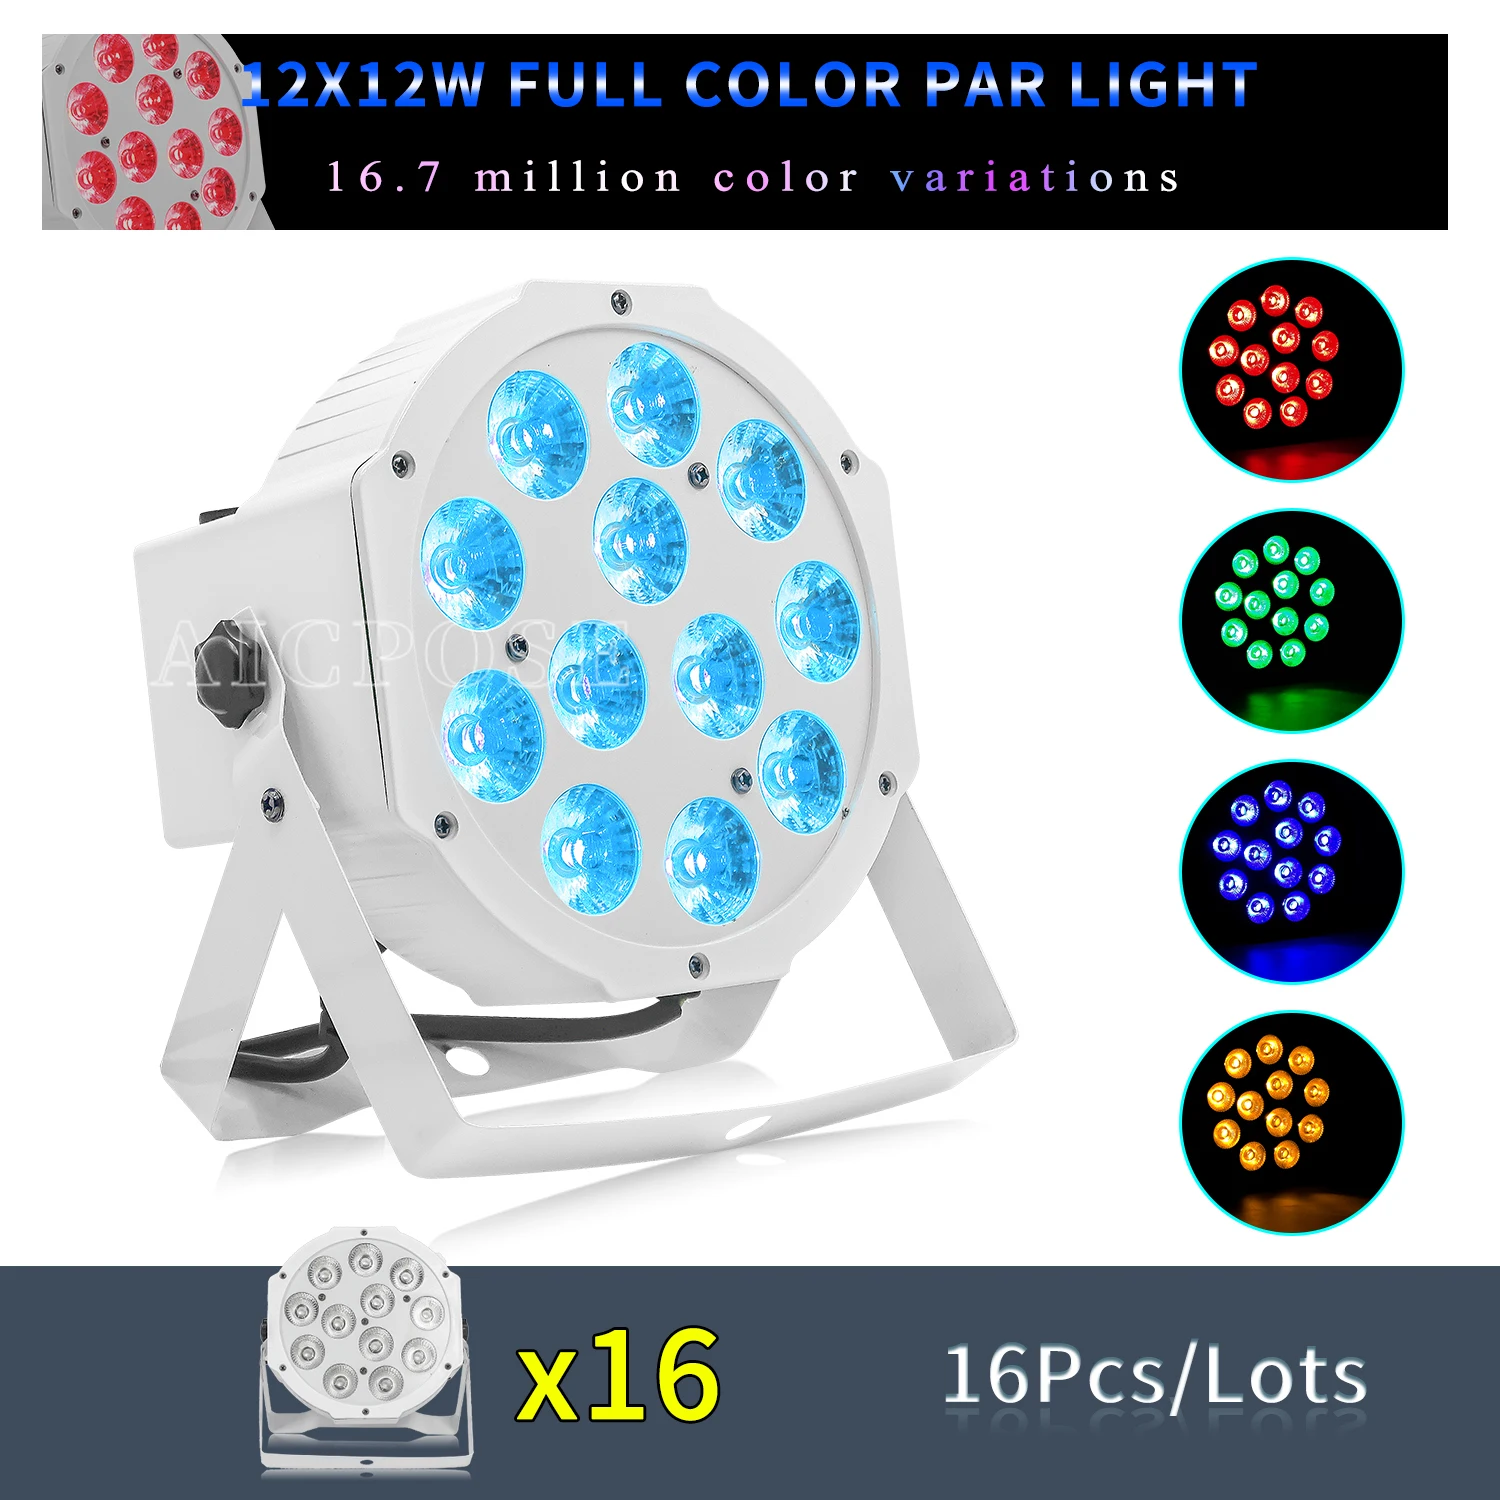 

16Pcs/lots Remote Control Par Light 12x12w RGBW 4 in 1 White Flat Par Light For Disco DJ Bar Party Wedding Stage Lighting